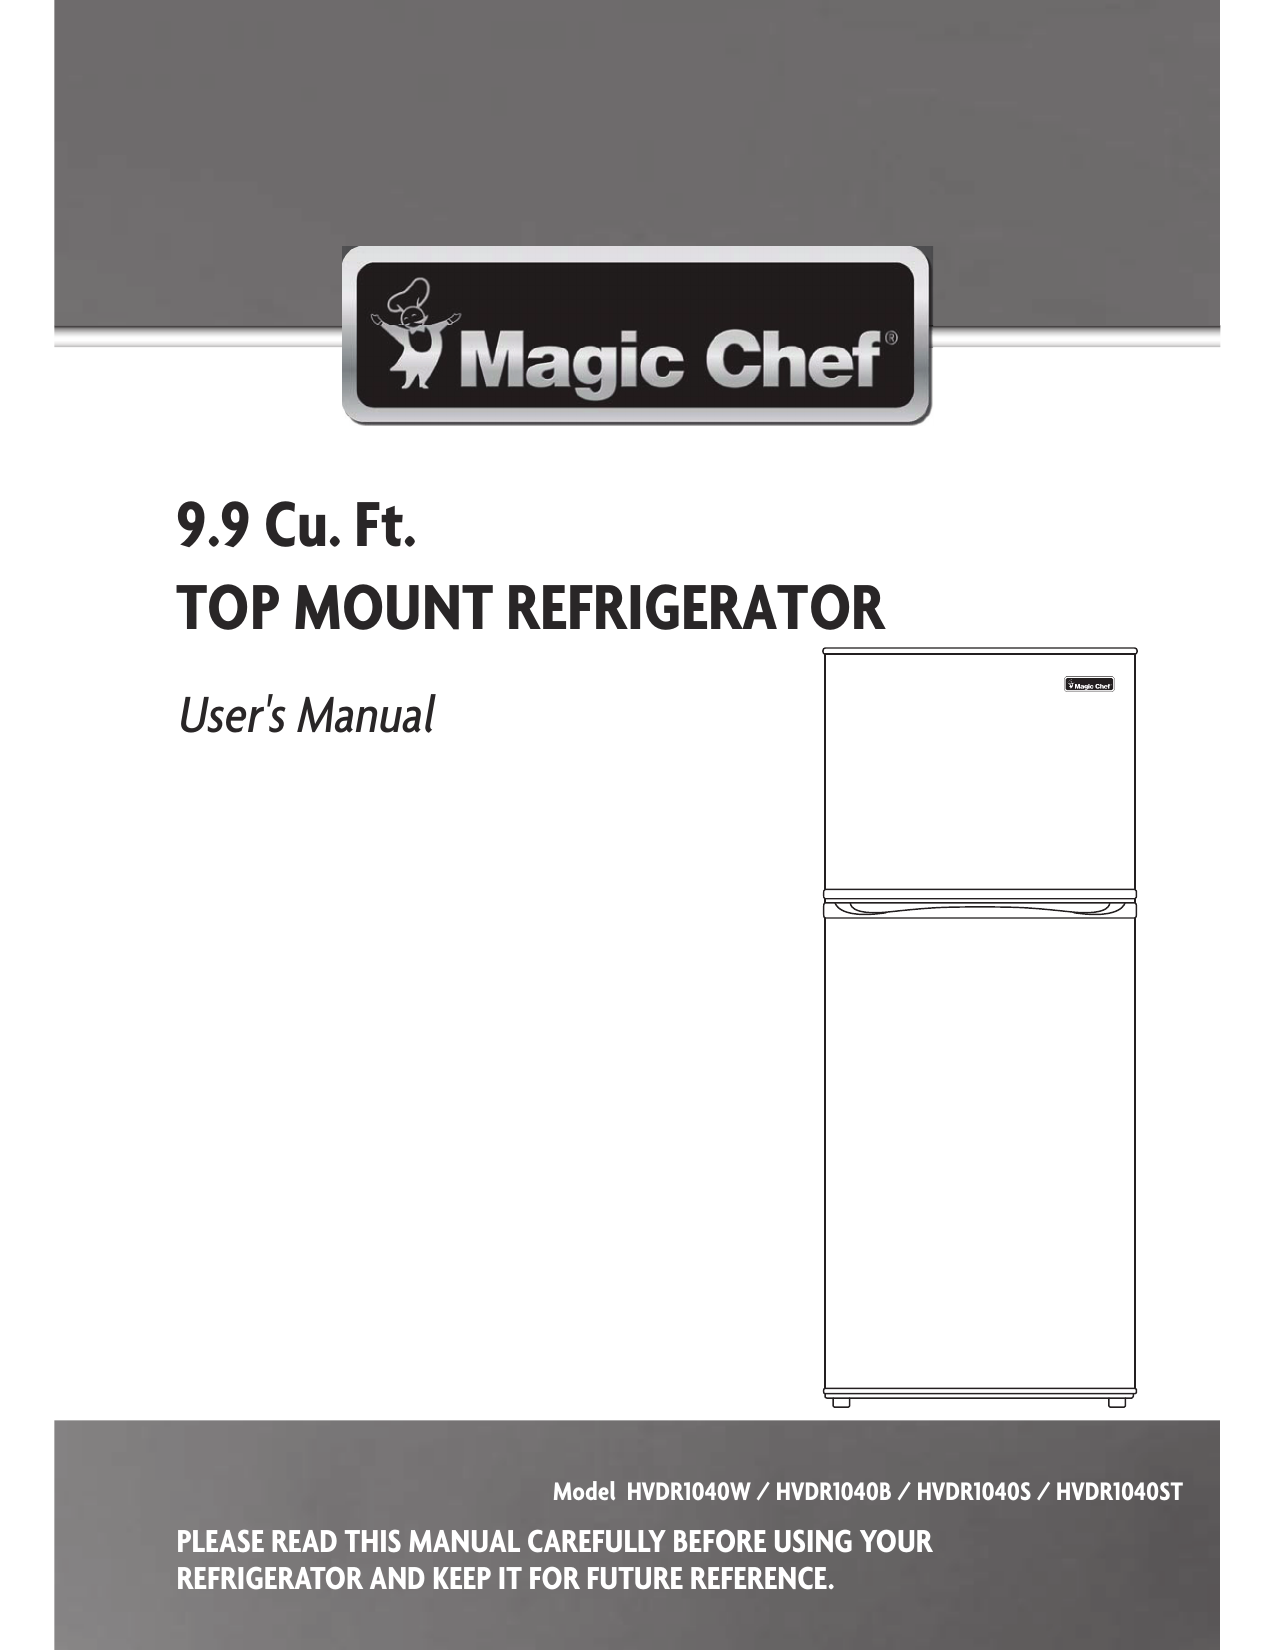 Magic Cooker Troubleshoot